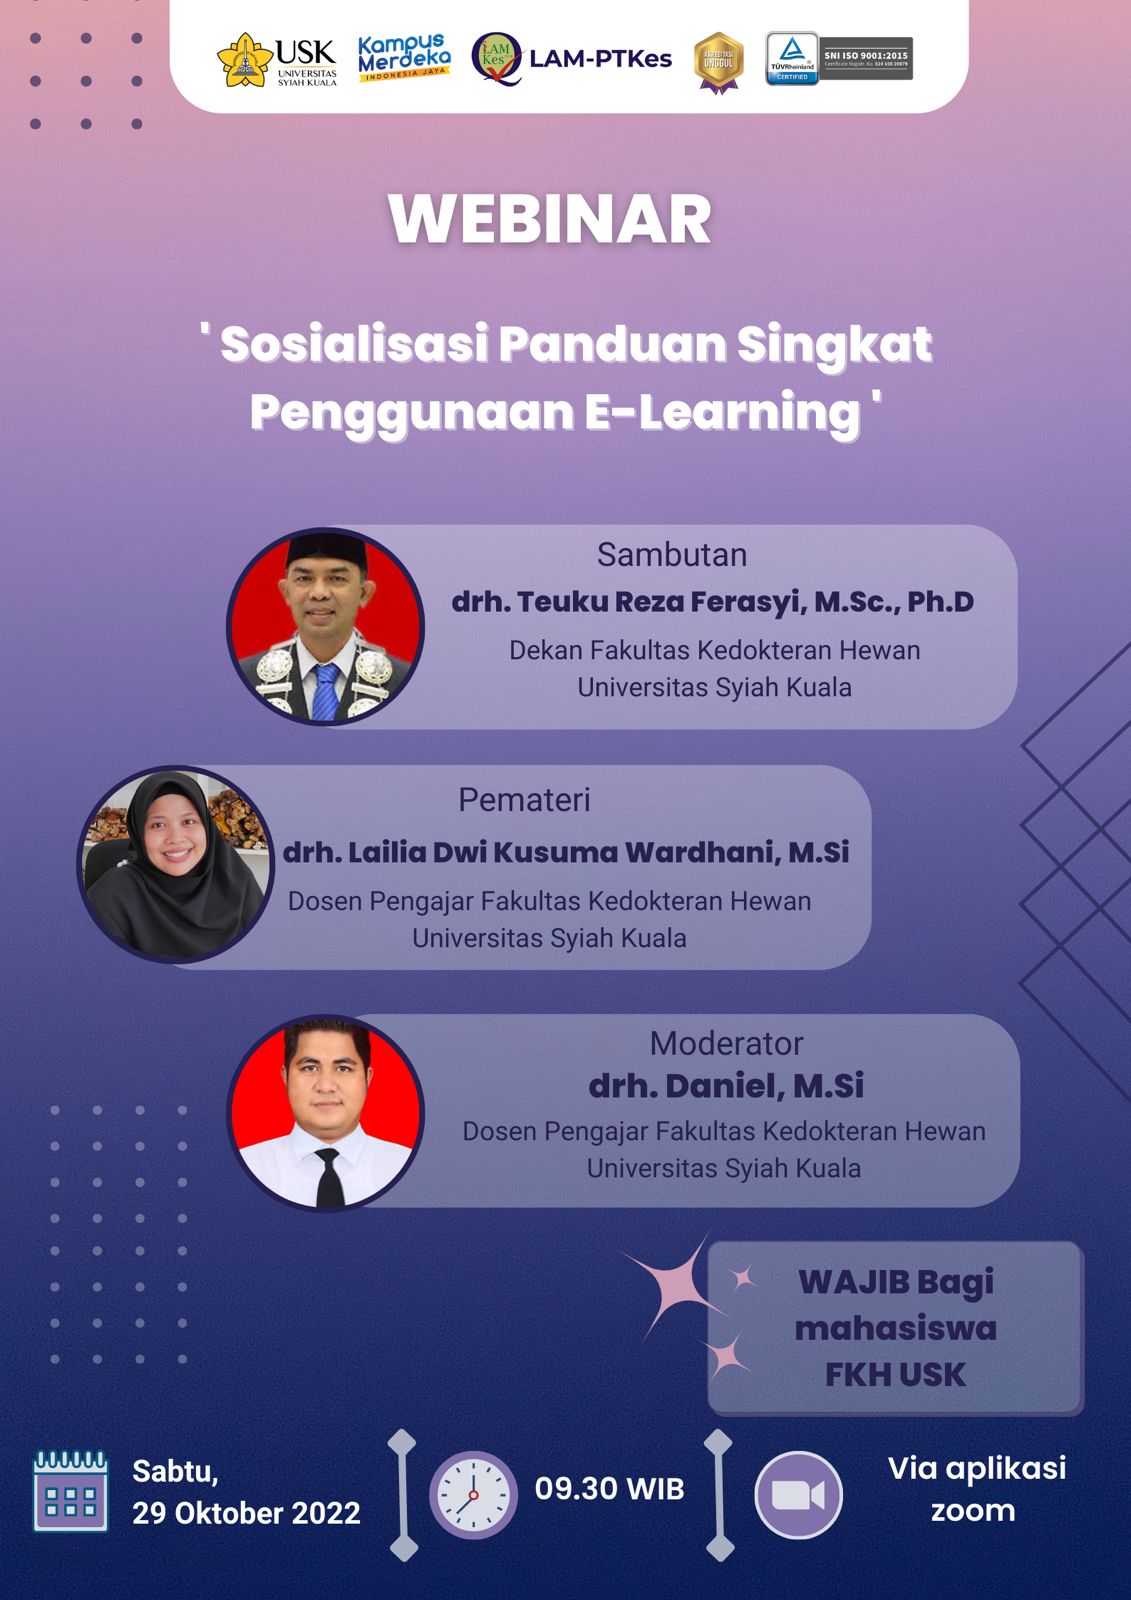 Webinar for Optimizing e-learning with Topic ‘Sosialisasi Panduan Singkat Penggunaan E-learning’. This Webinar for Vetmed USK Student. Saturday, October 29, 2022.